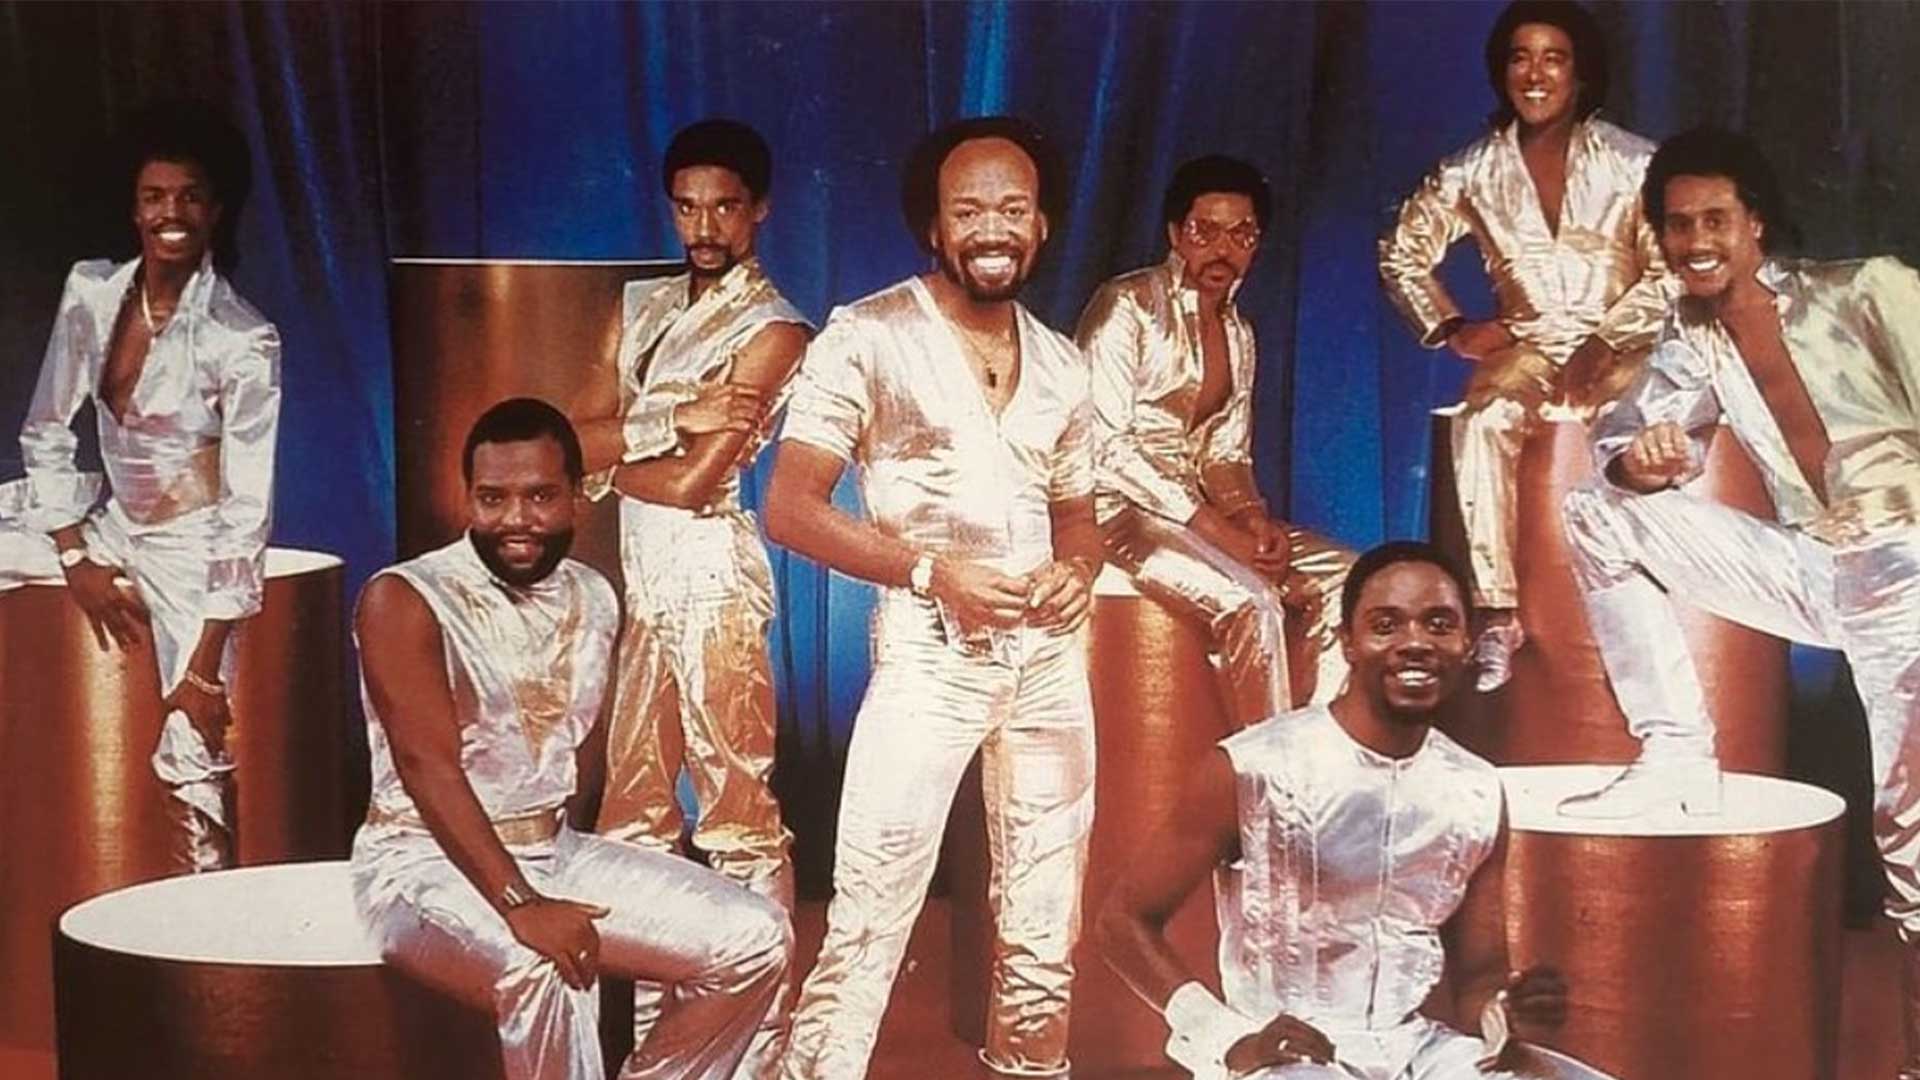 A famous disco group